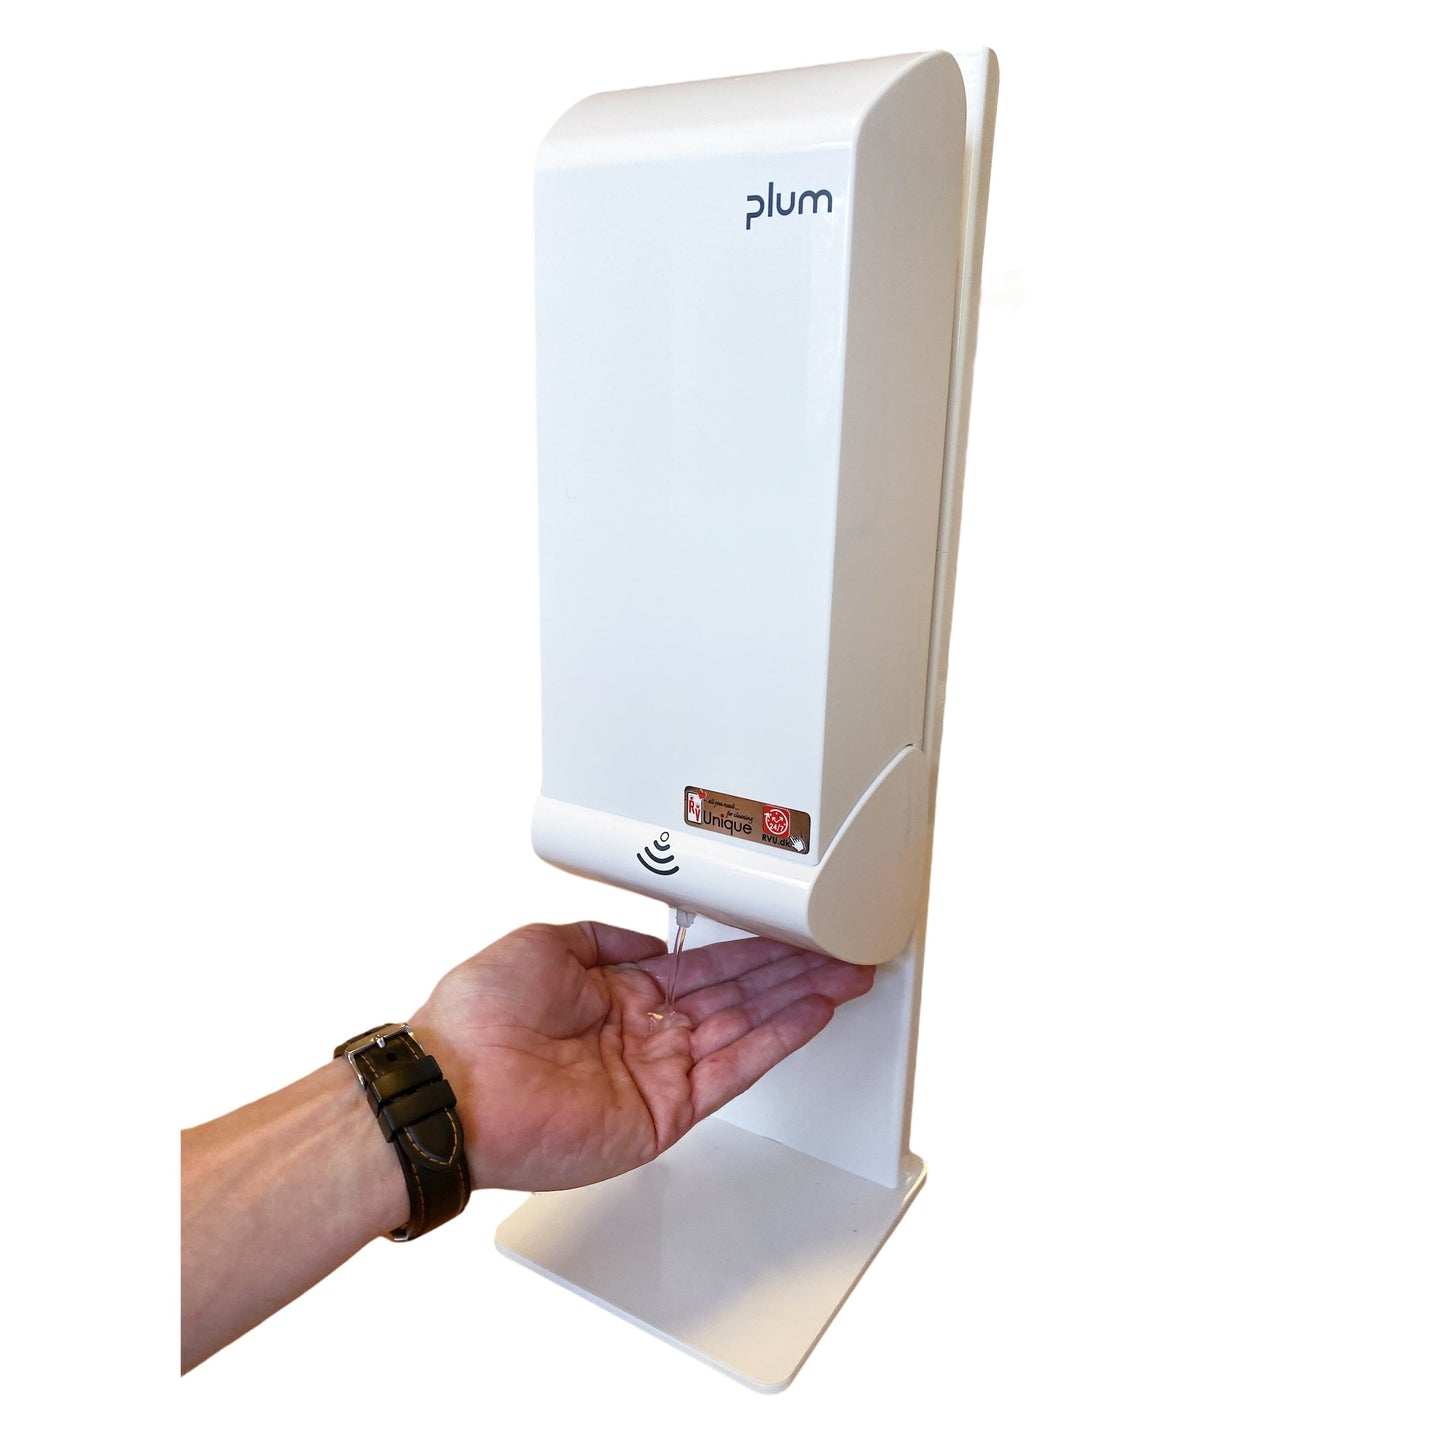 PlUM CombiPlum bordstander m/Elctronic Dispenser